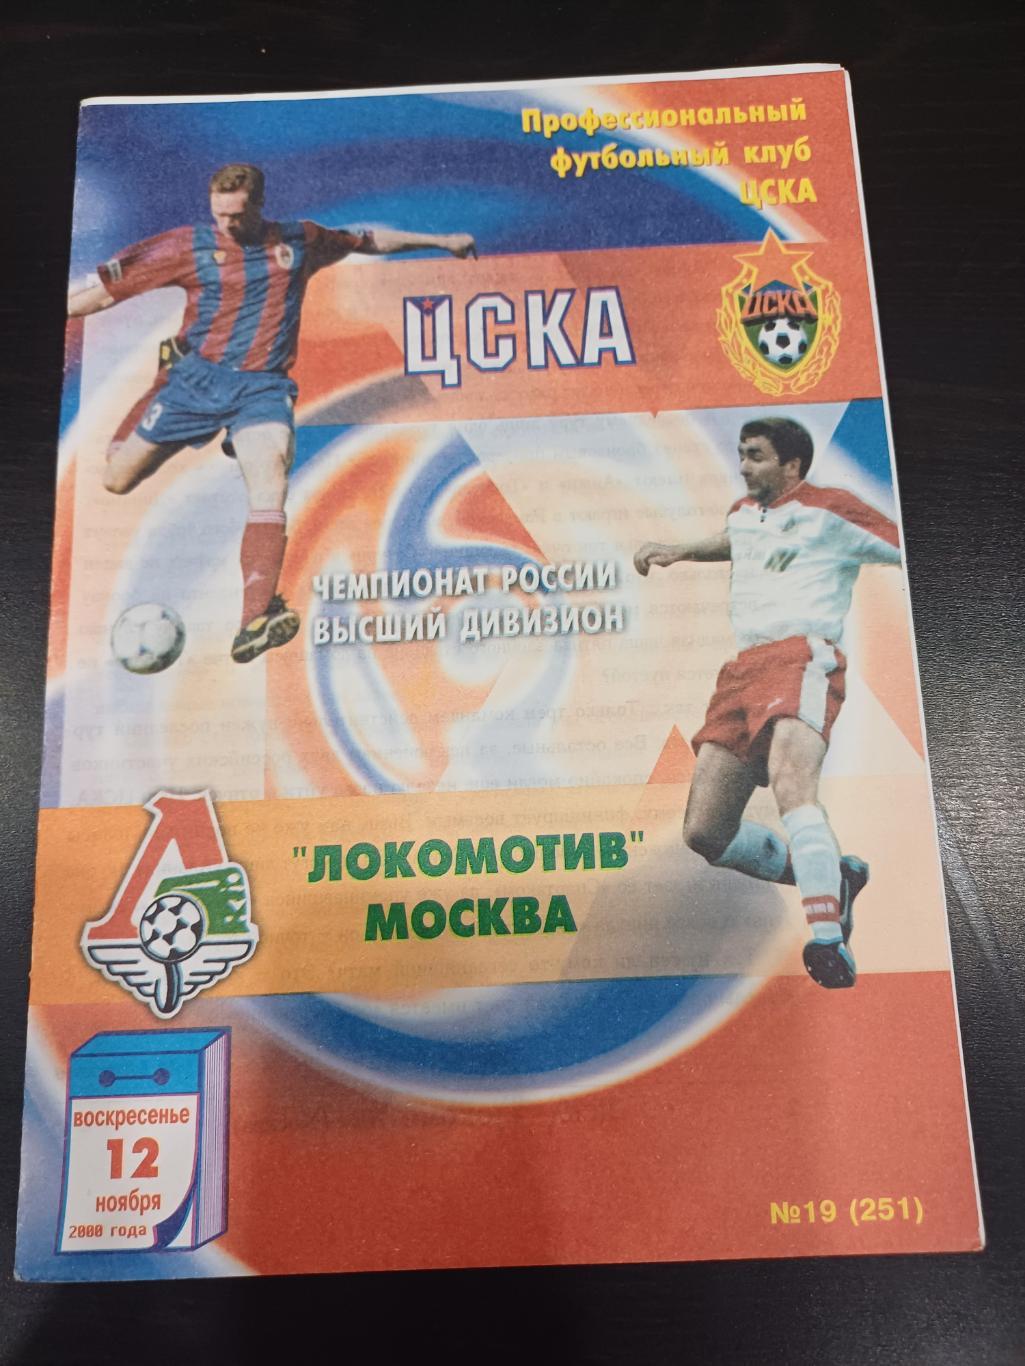 Цска - Локомотив Москва 2000